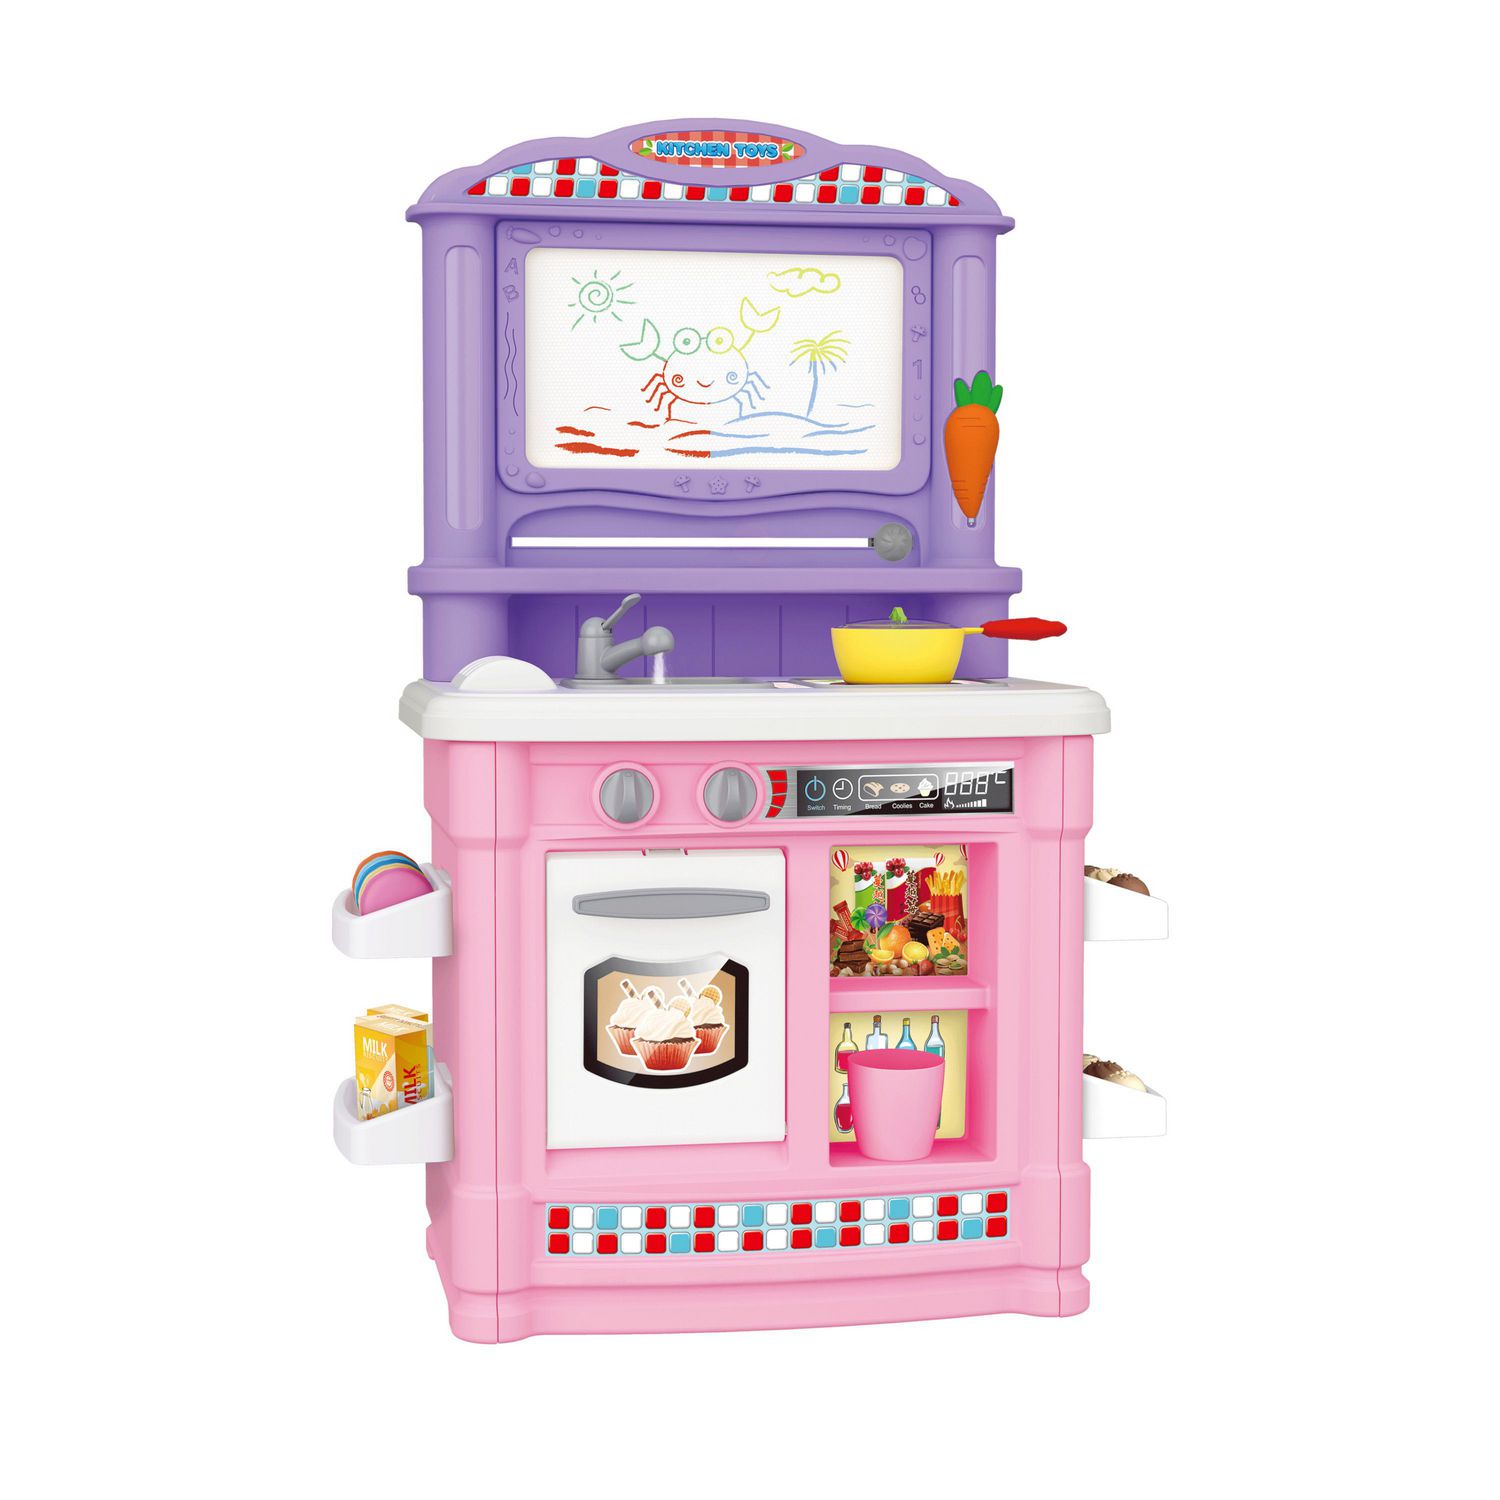 Walmart Kitchen Set Toys Accessories For Ipad / Play Kitchen